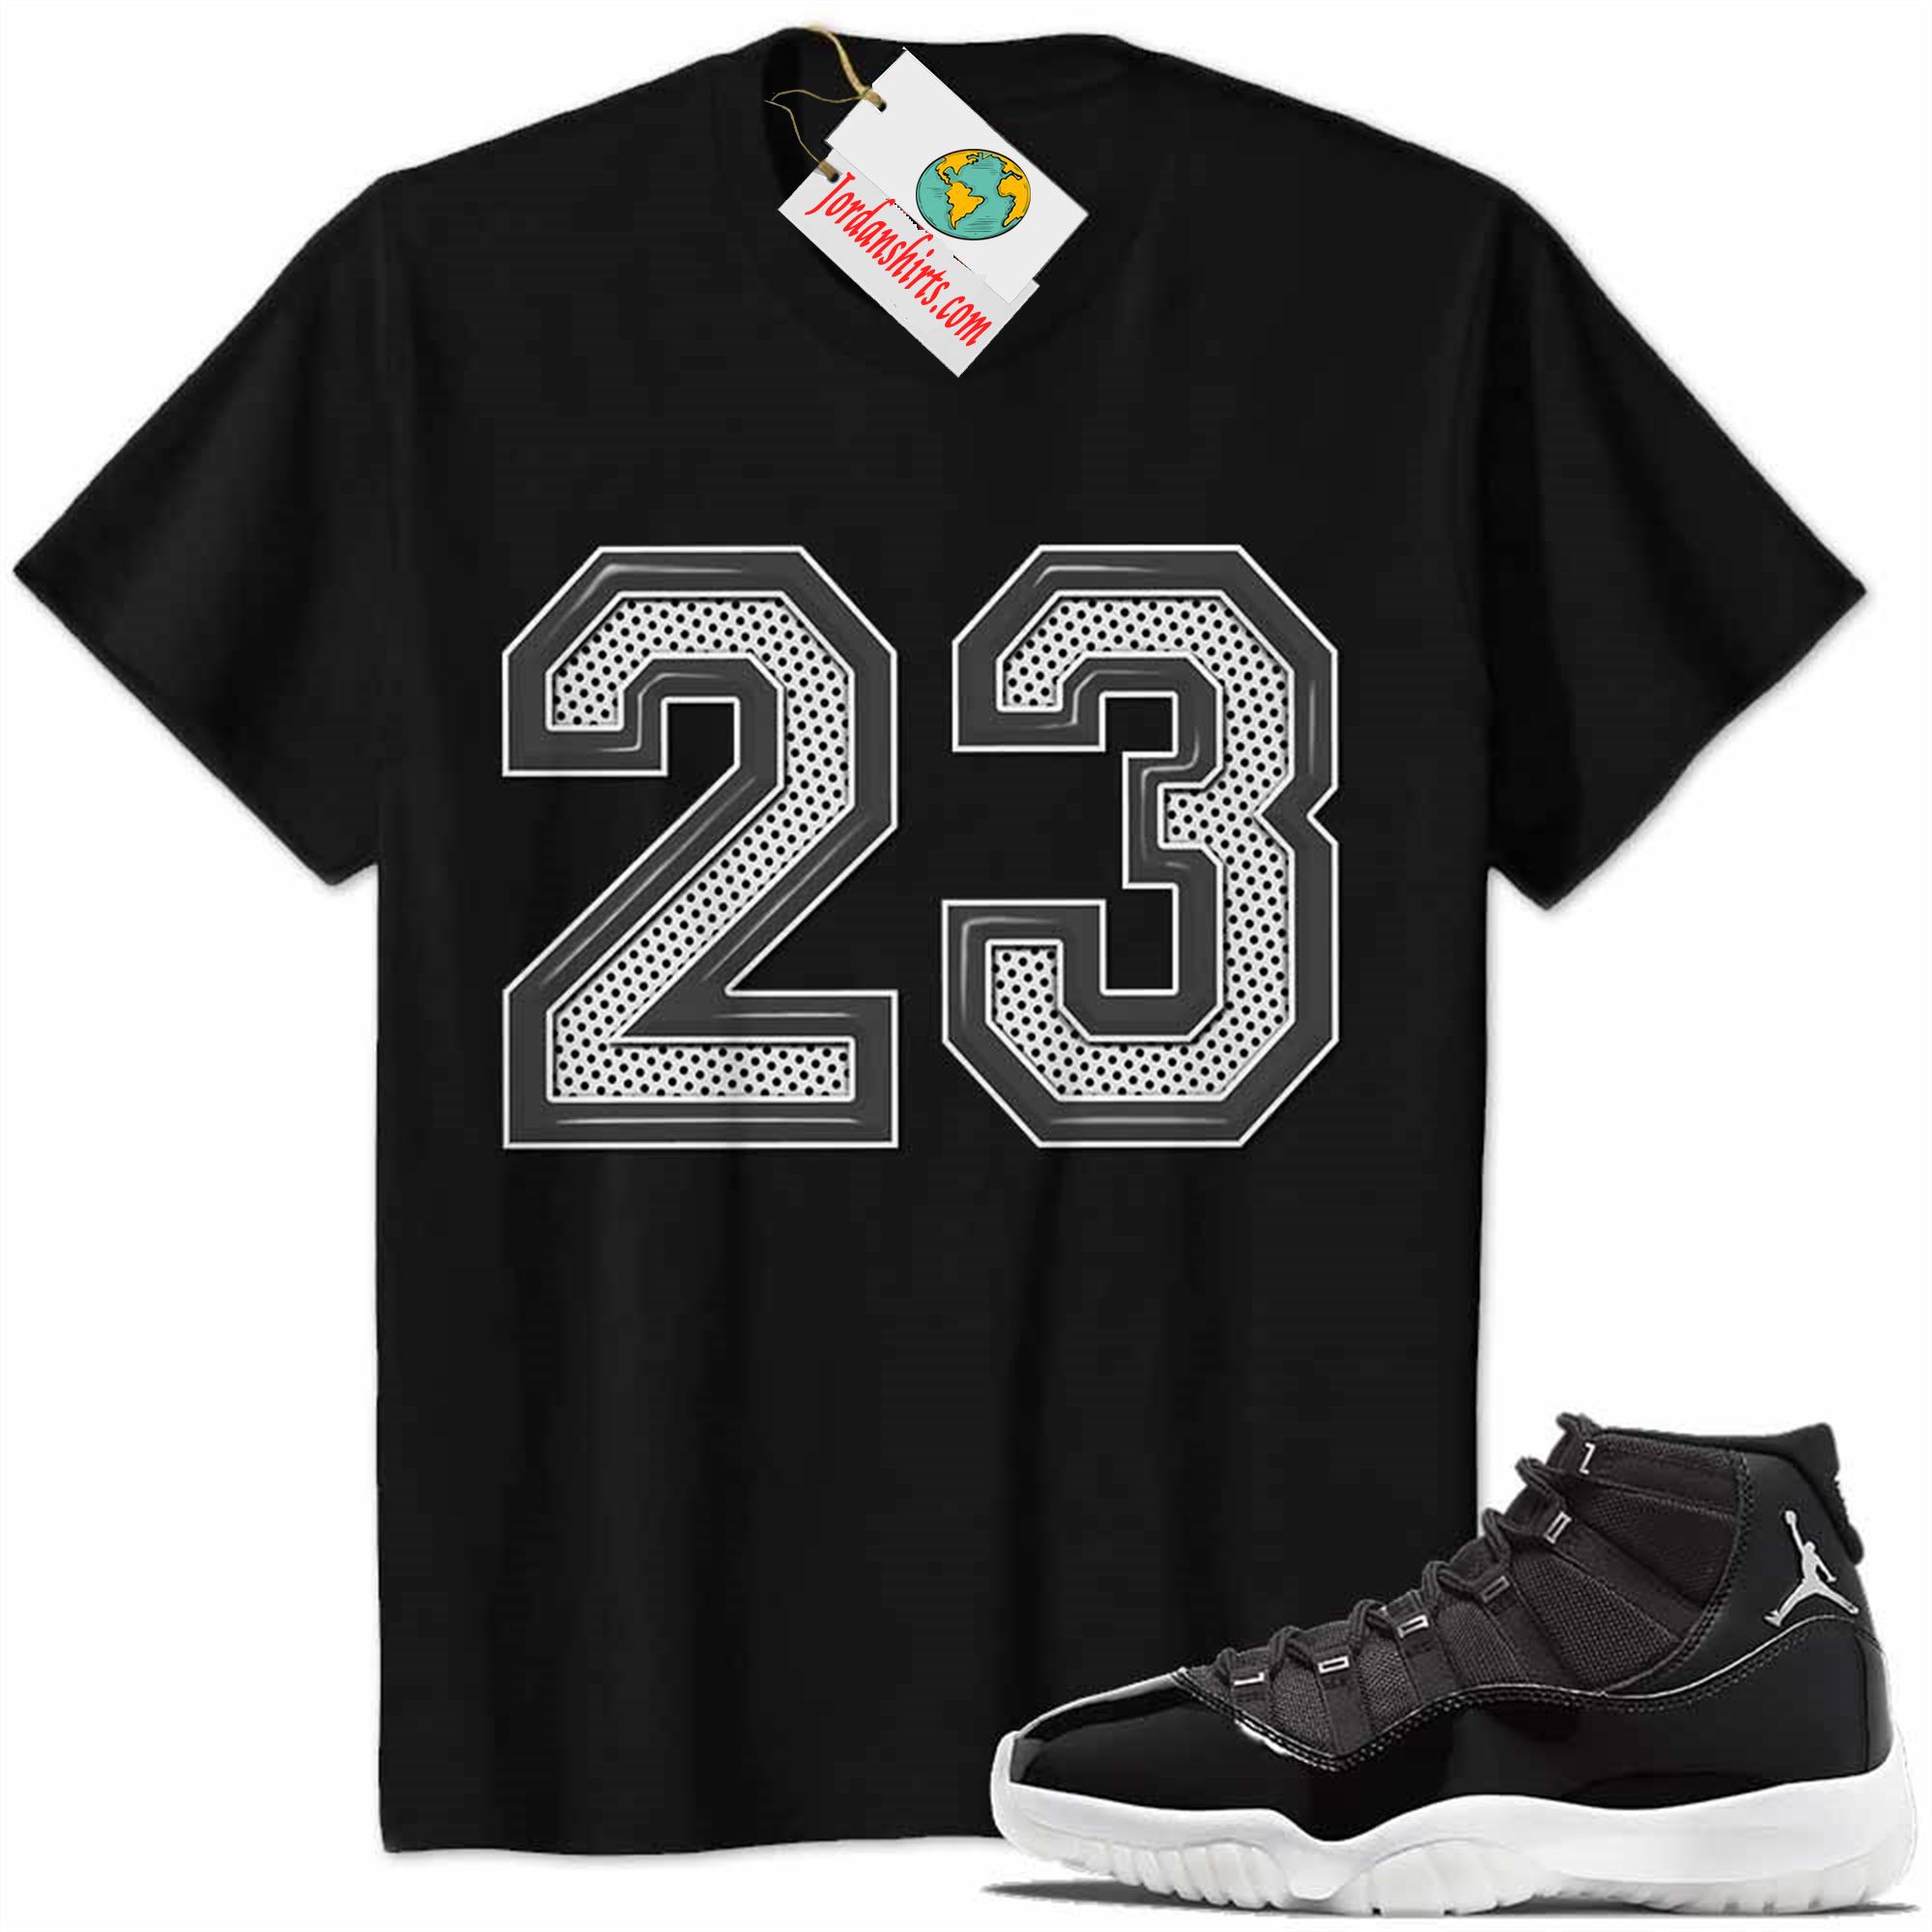 Jordan 11 Shirt, Jordan 11 Jubilee Shirt Michael Jordan Number 23 Black Size Up To 5xl